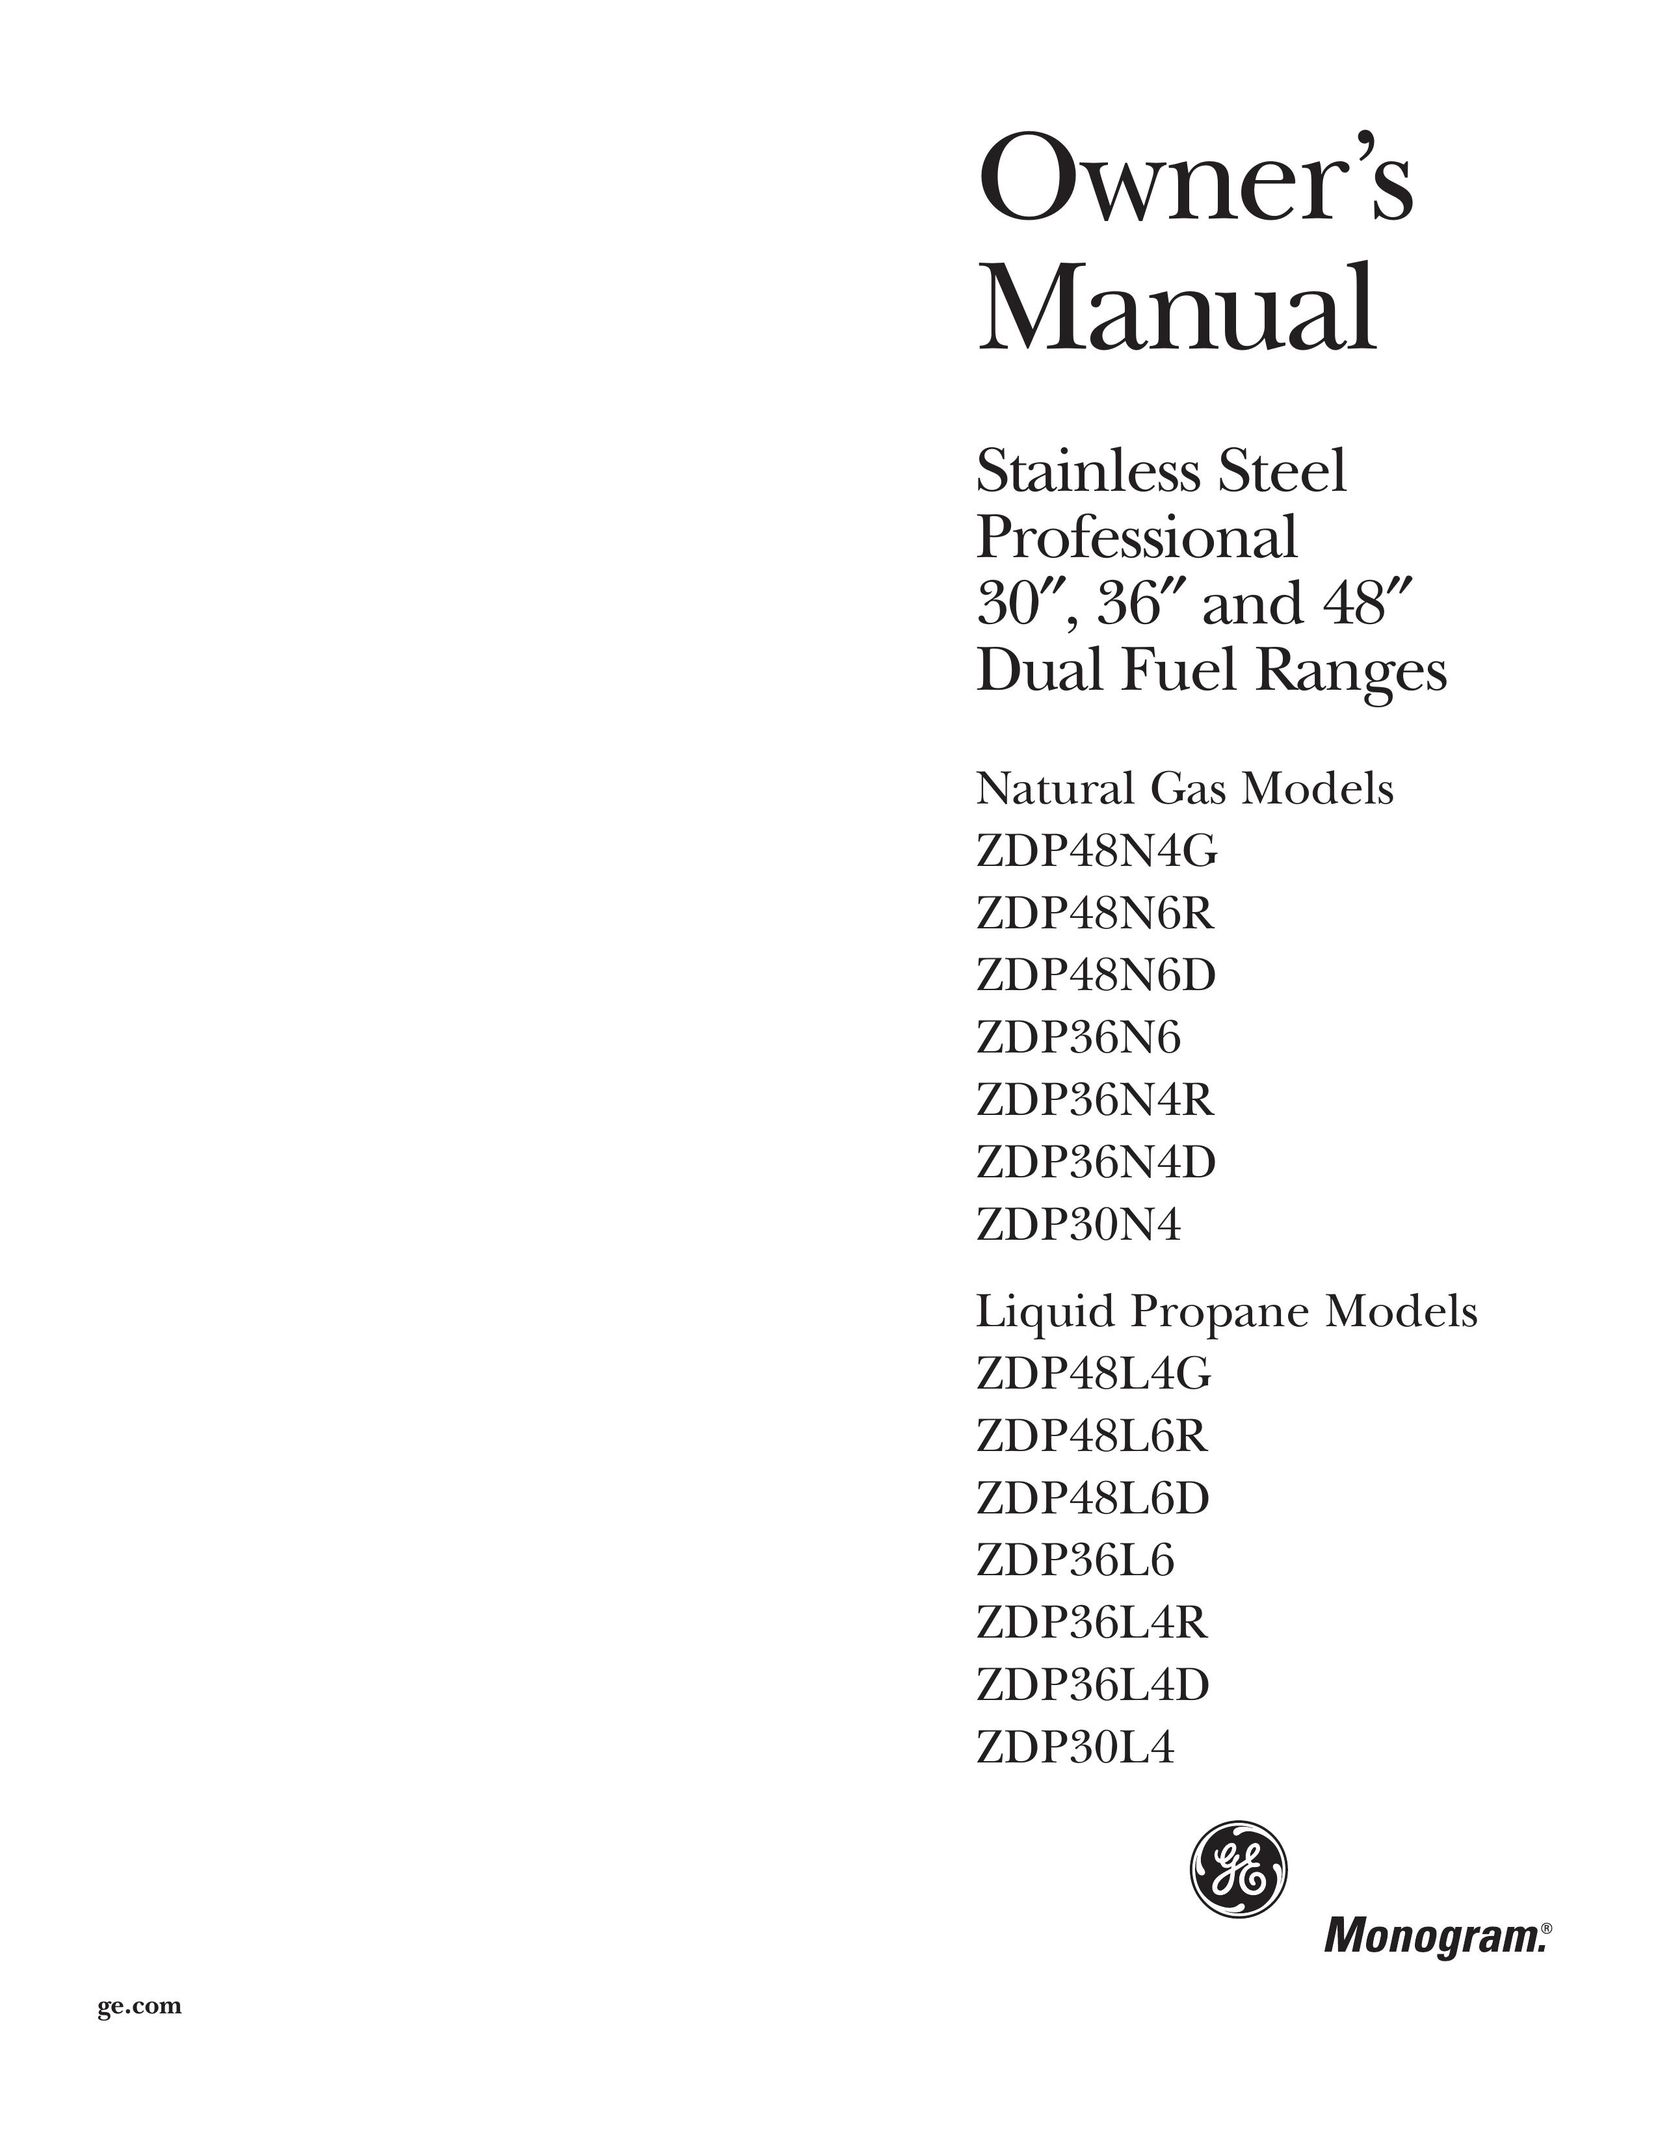 GE Monogram ZDP36N4D Range User Manual